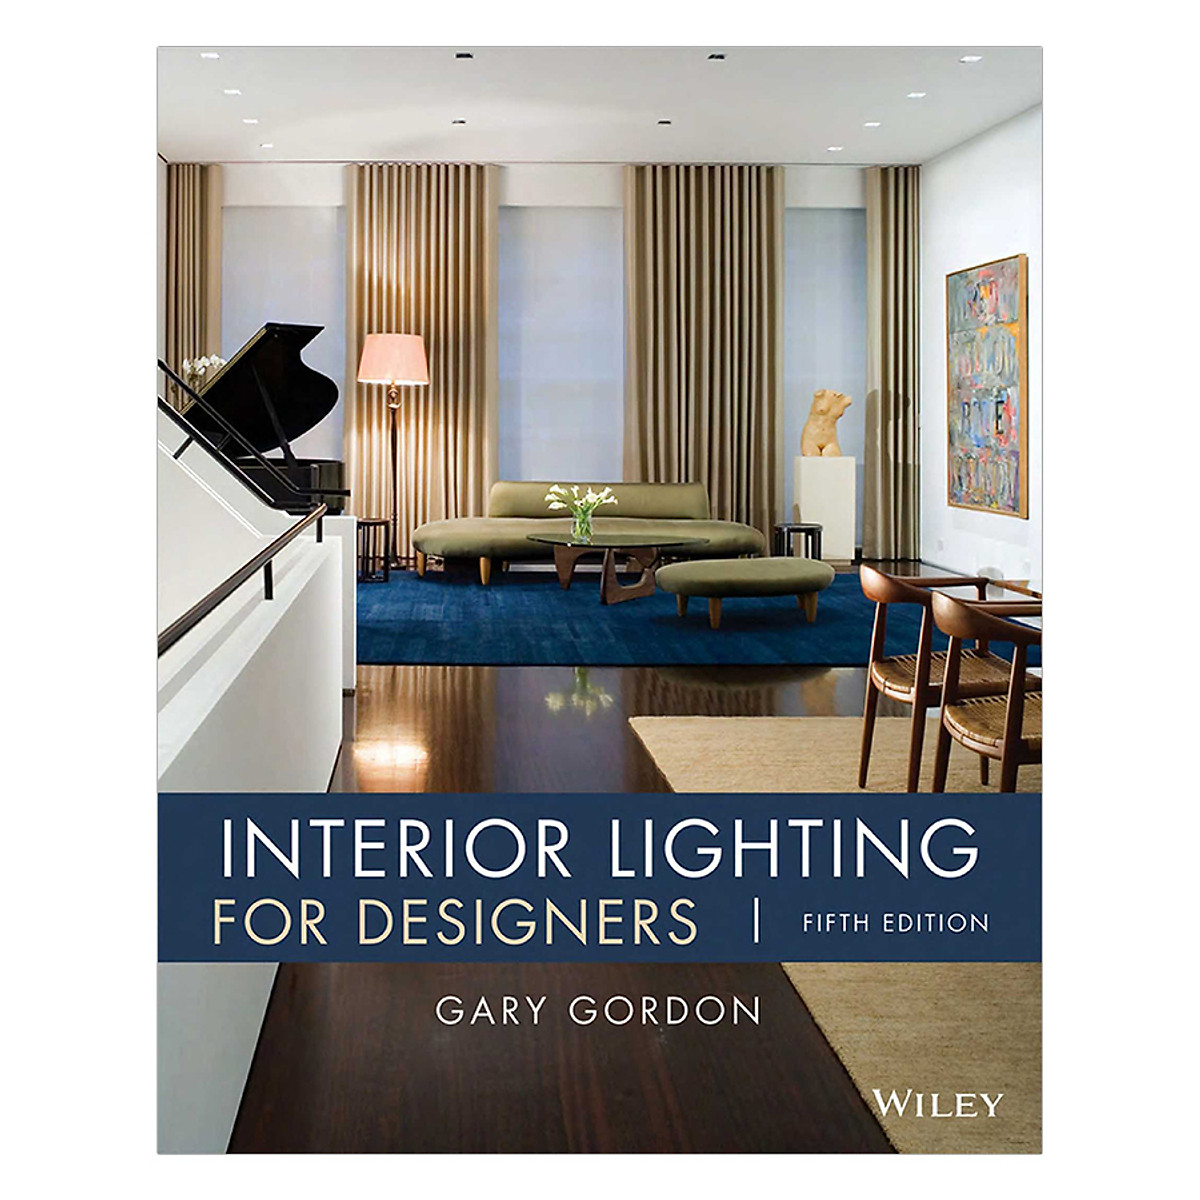 Interior Lighting For Designers, 5th Edition